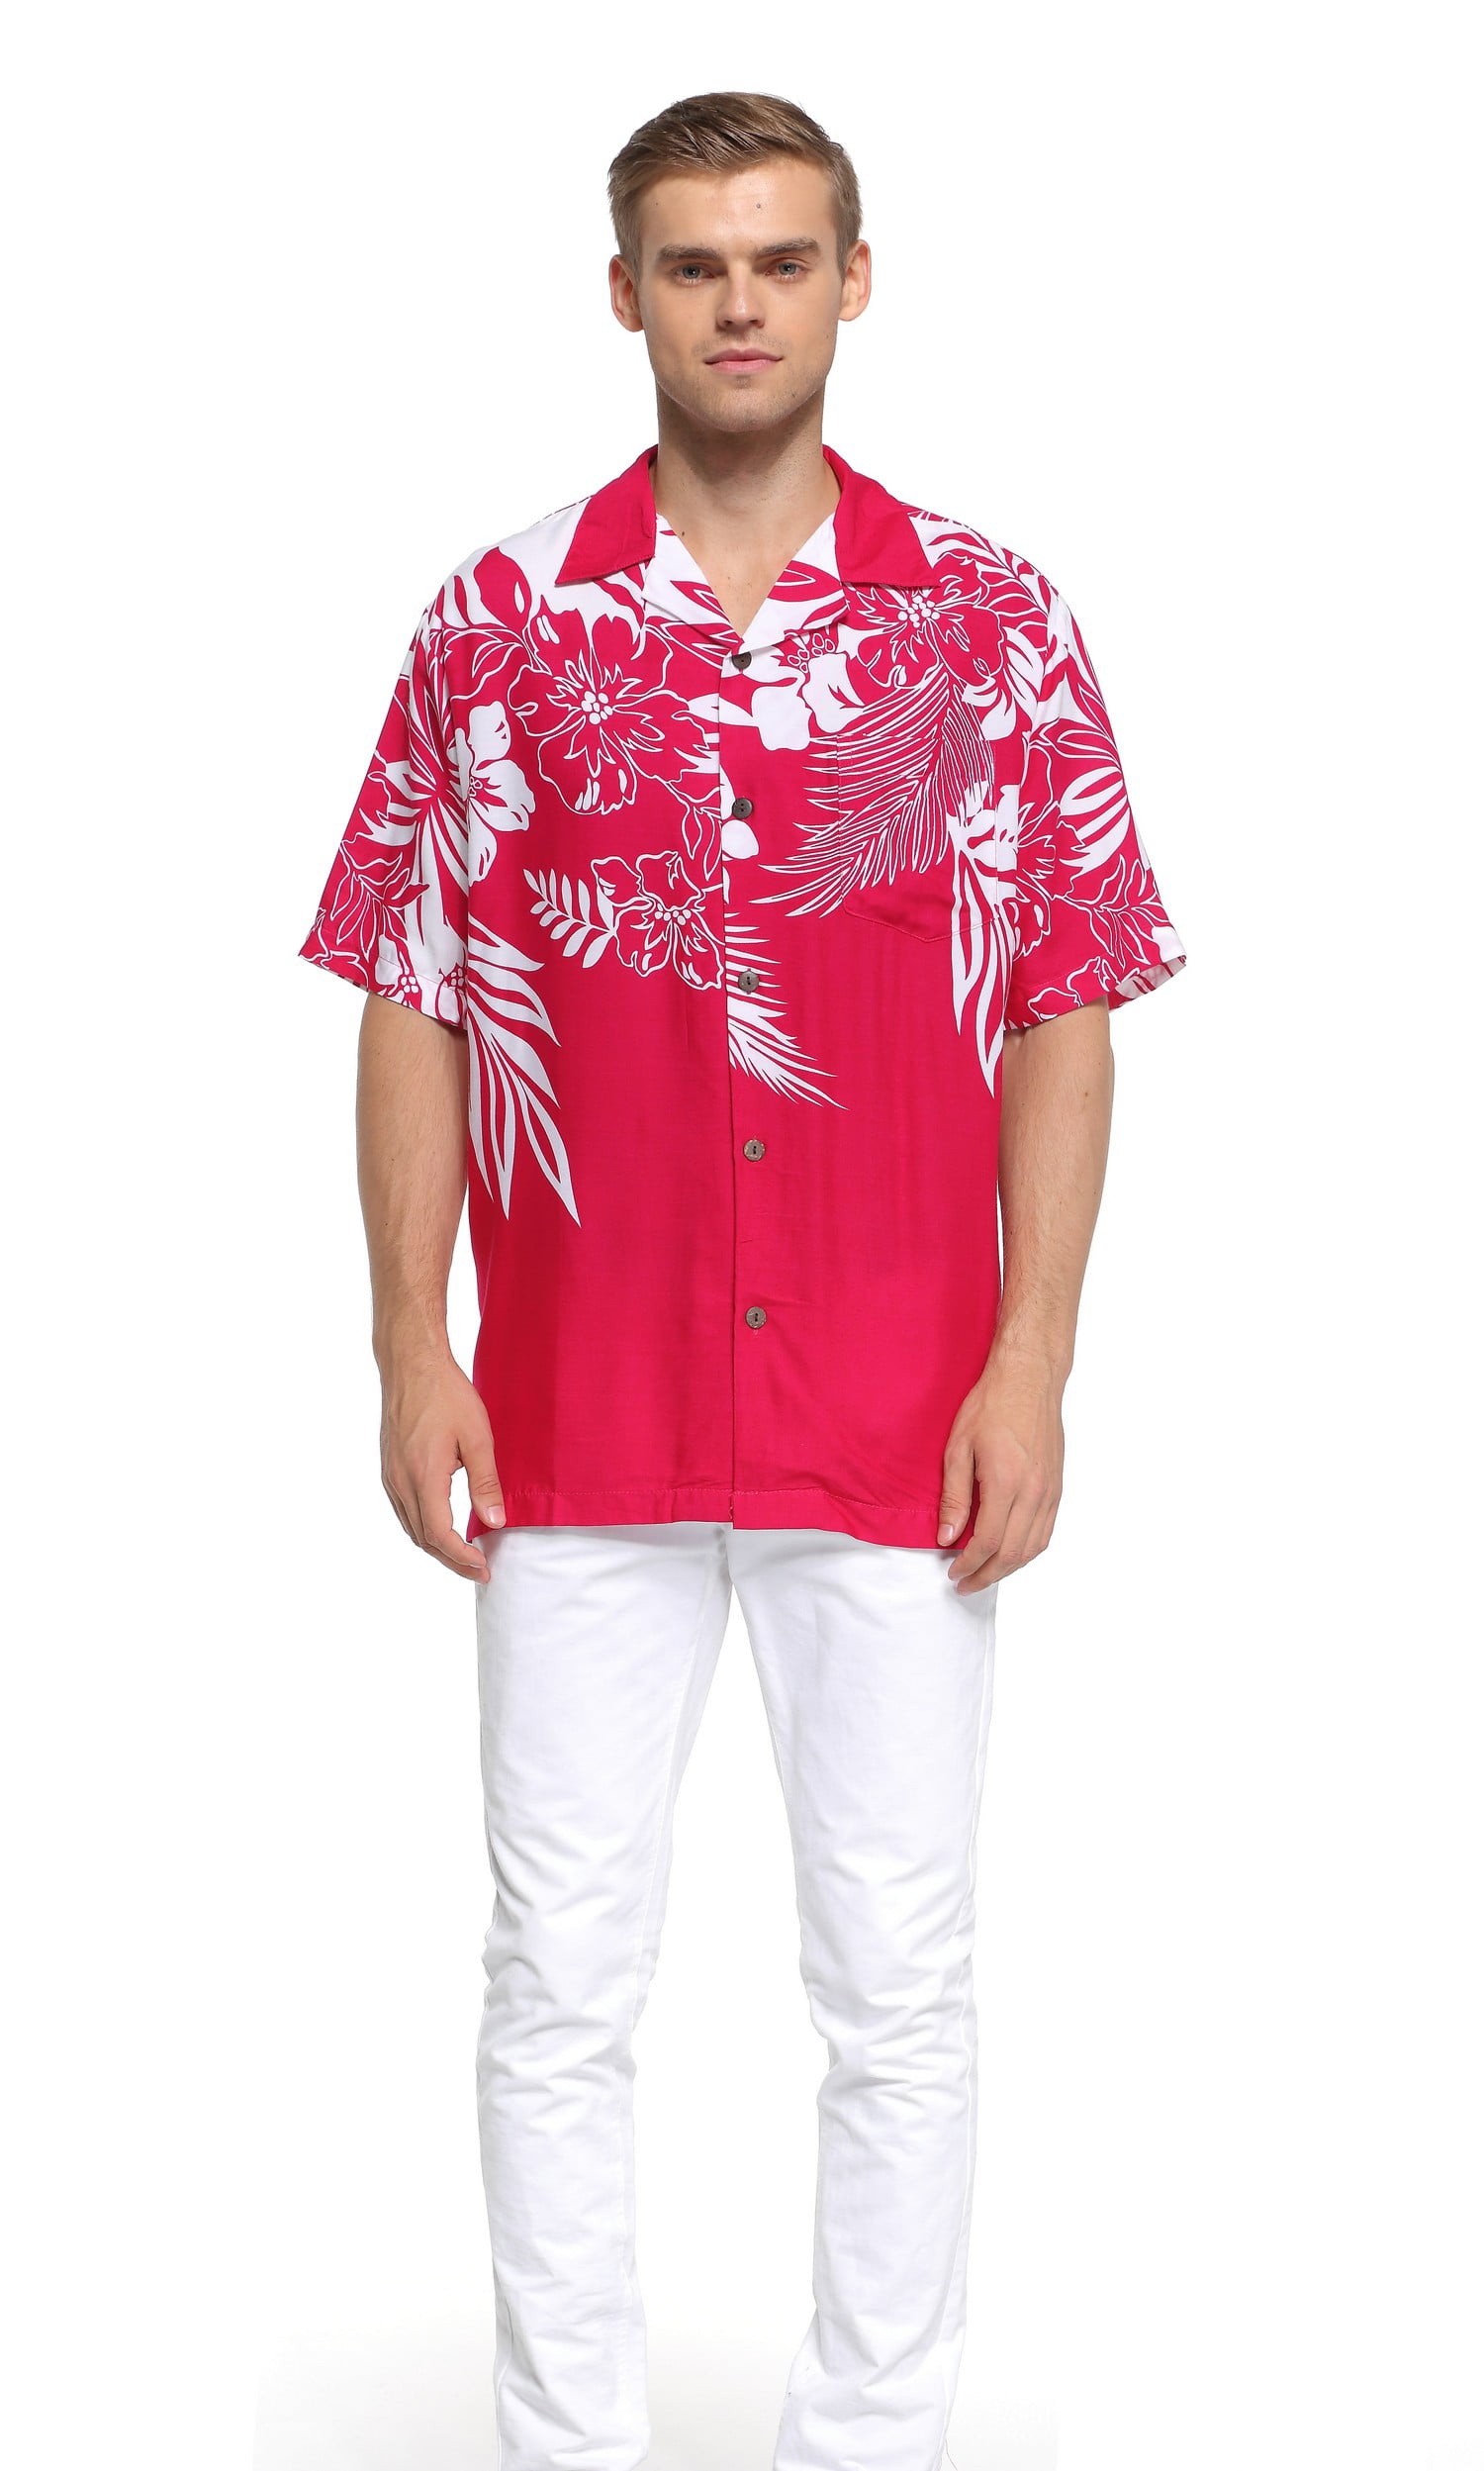 Men's Hawaiian Shirt Aloha Shirt Floral Edge in Pink 3XL - Walmart.com